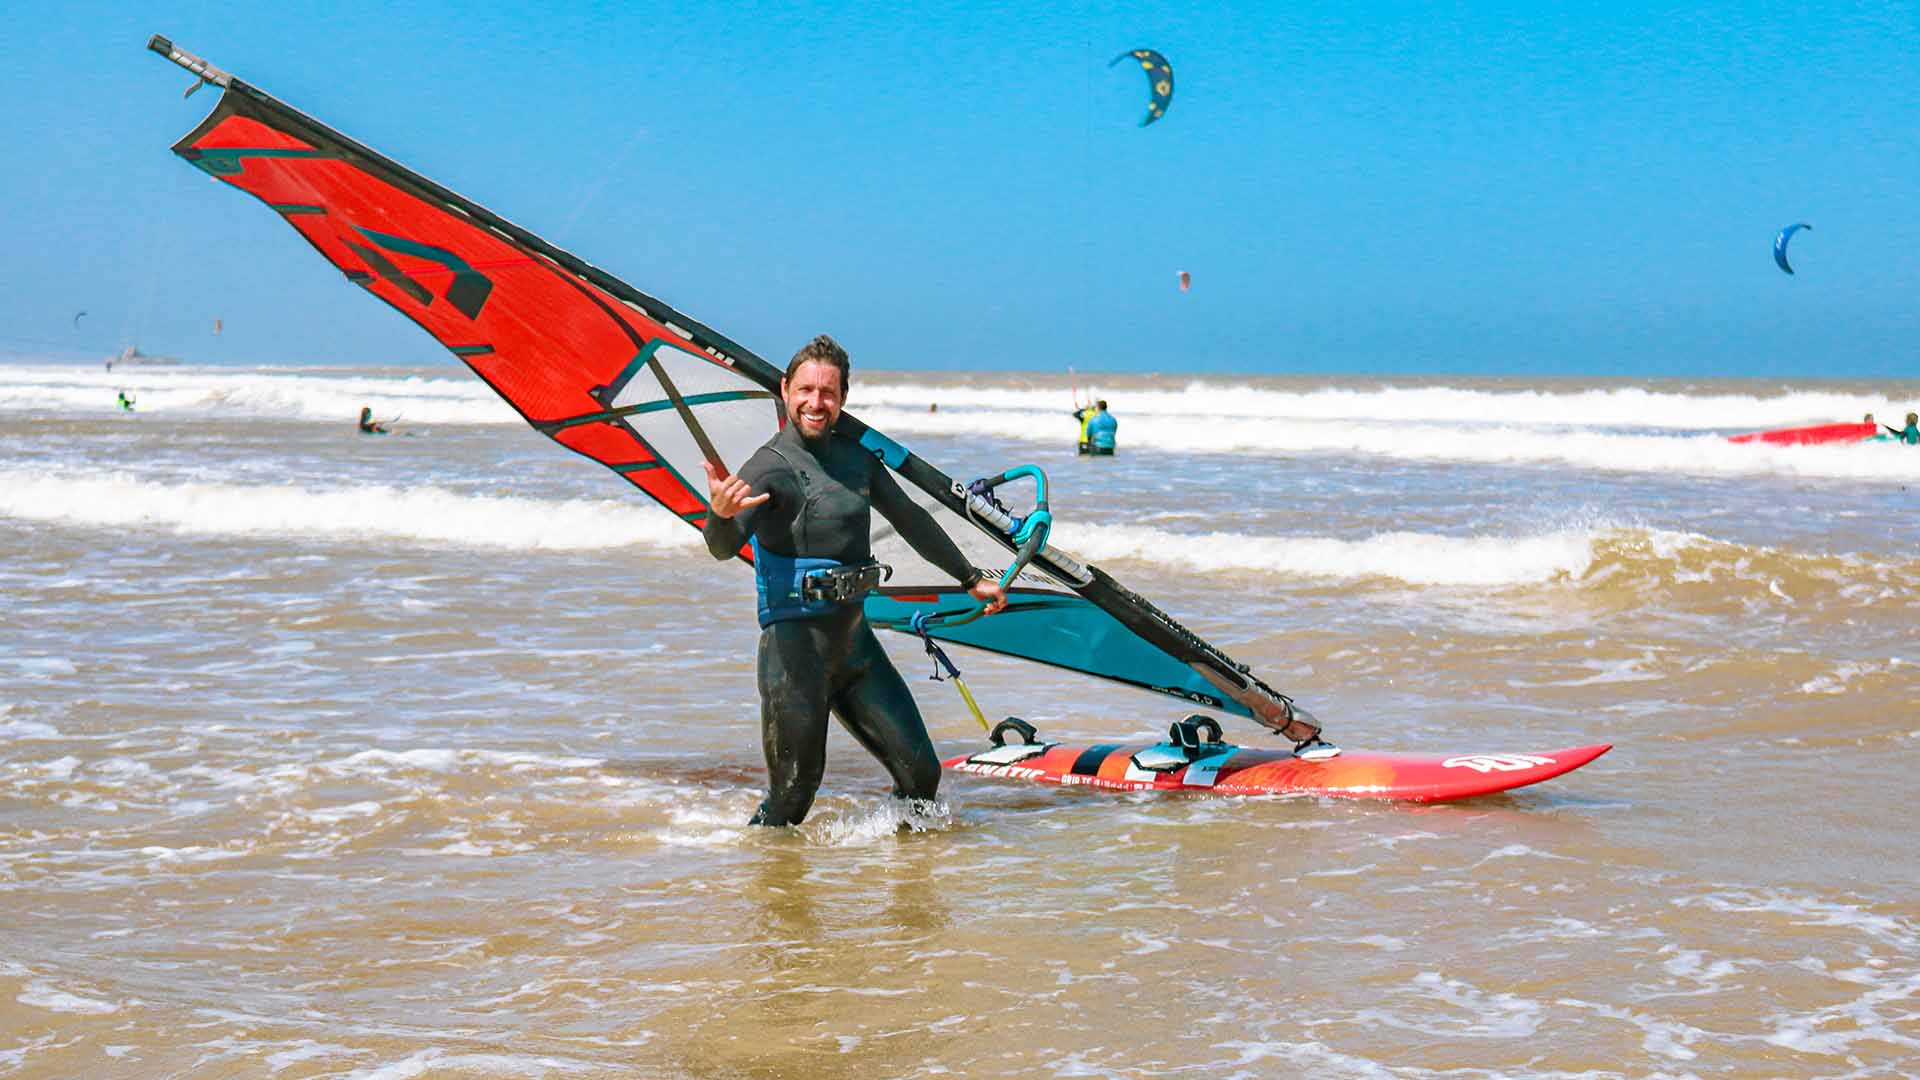 essaouira windsurfer smiling on the water